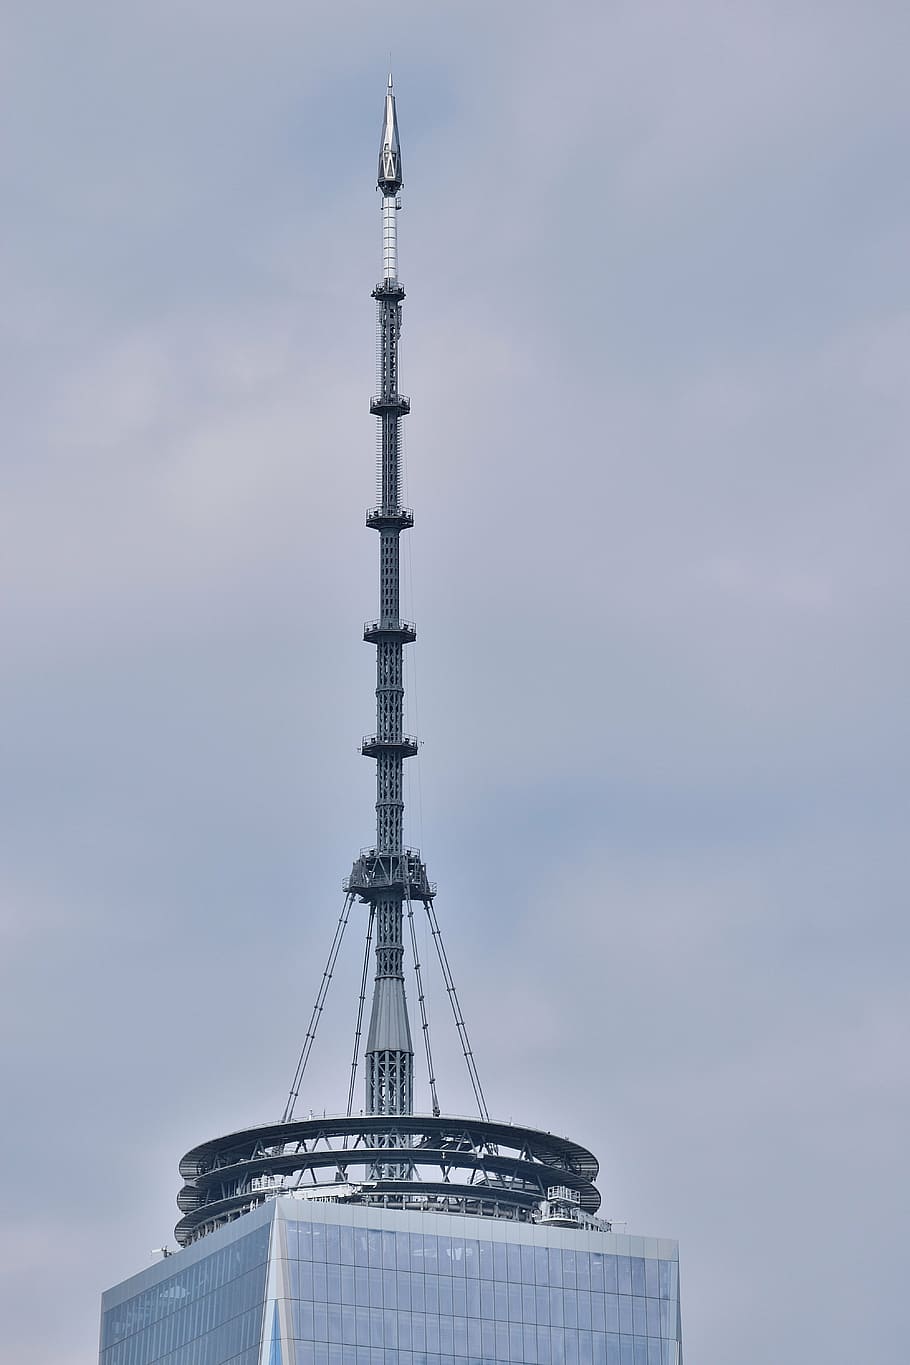 new york, antenna, one world trade center, tower, communications Tower